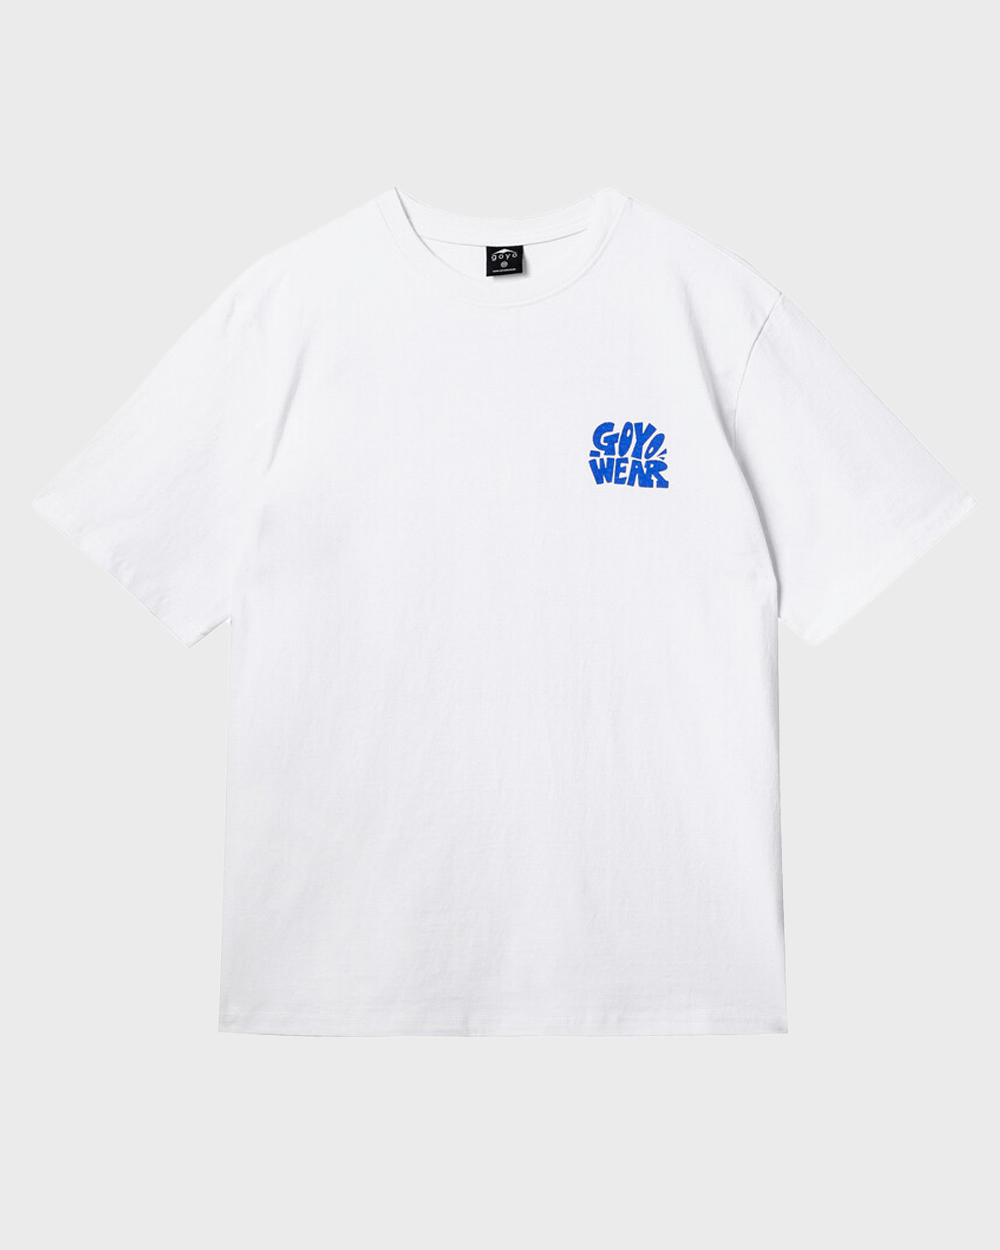 Soundless T-Shirts (White)